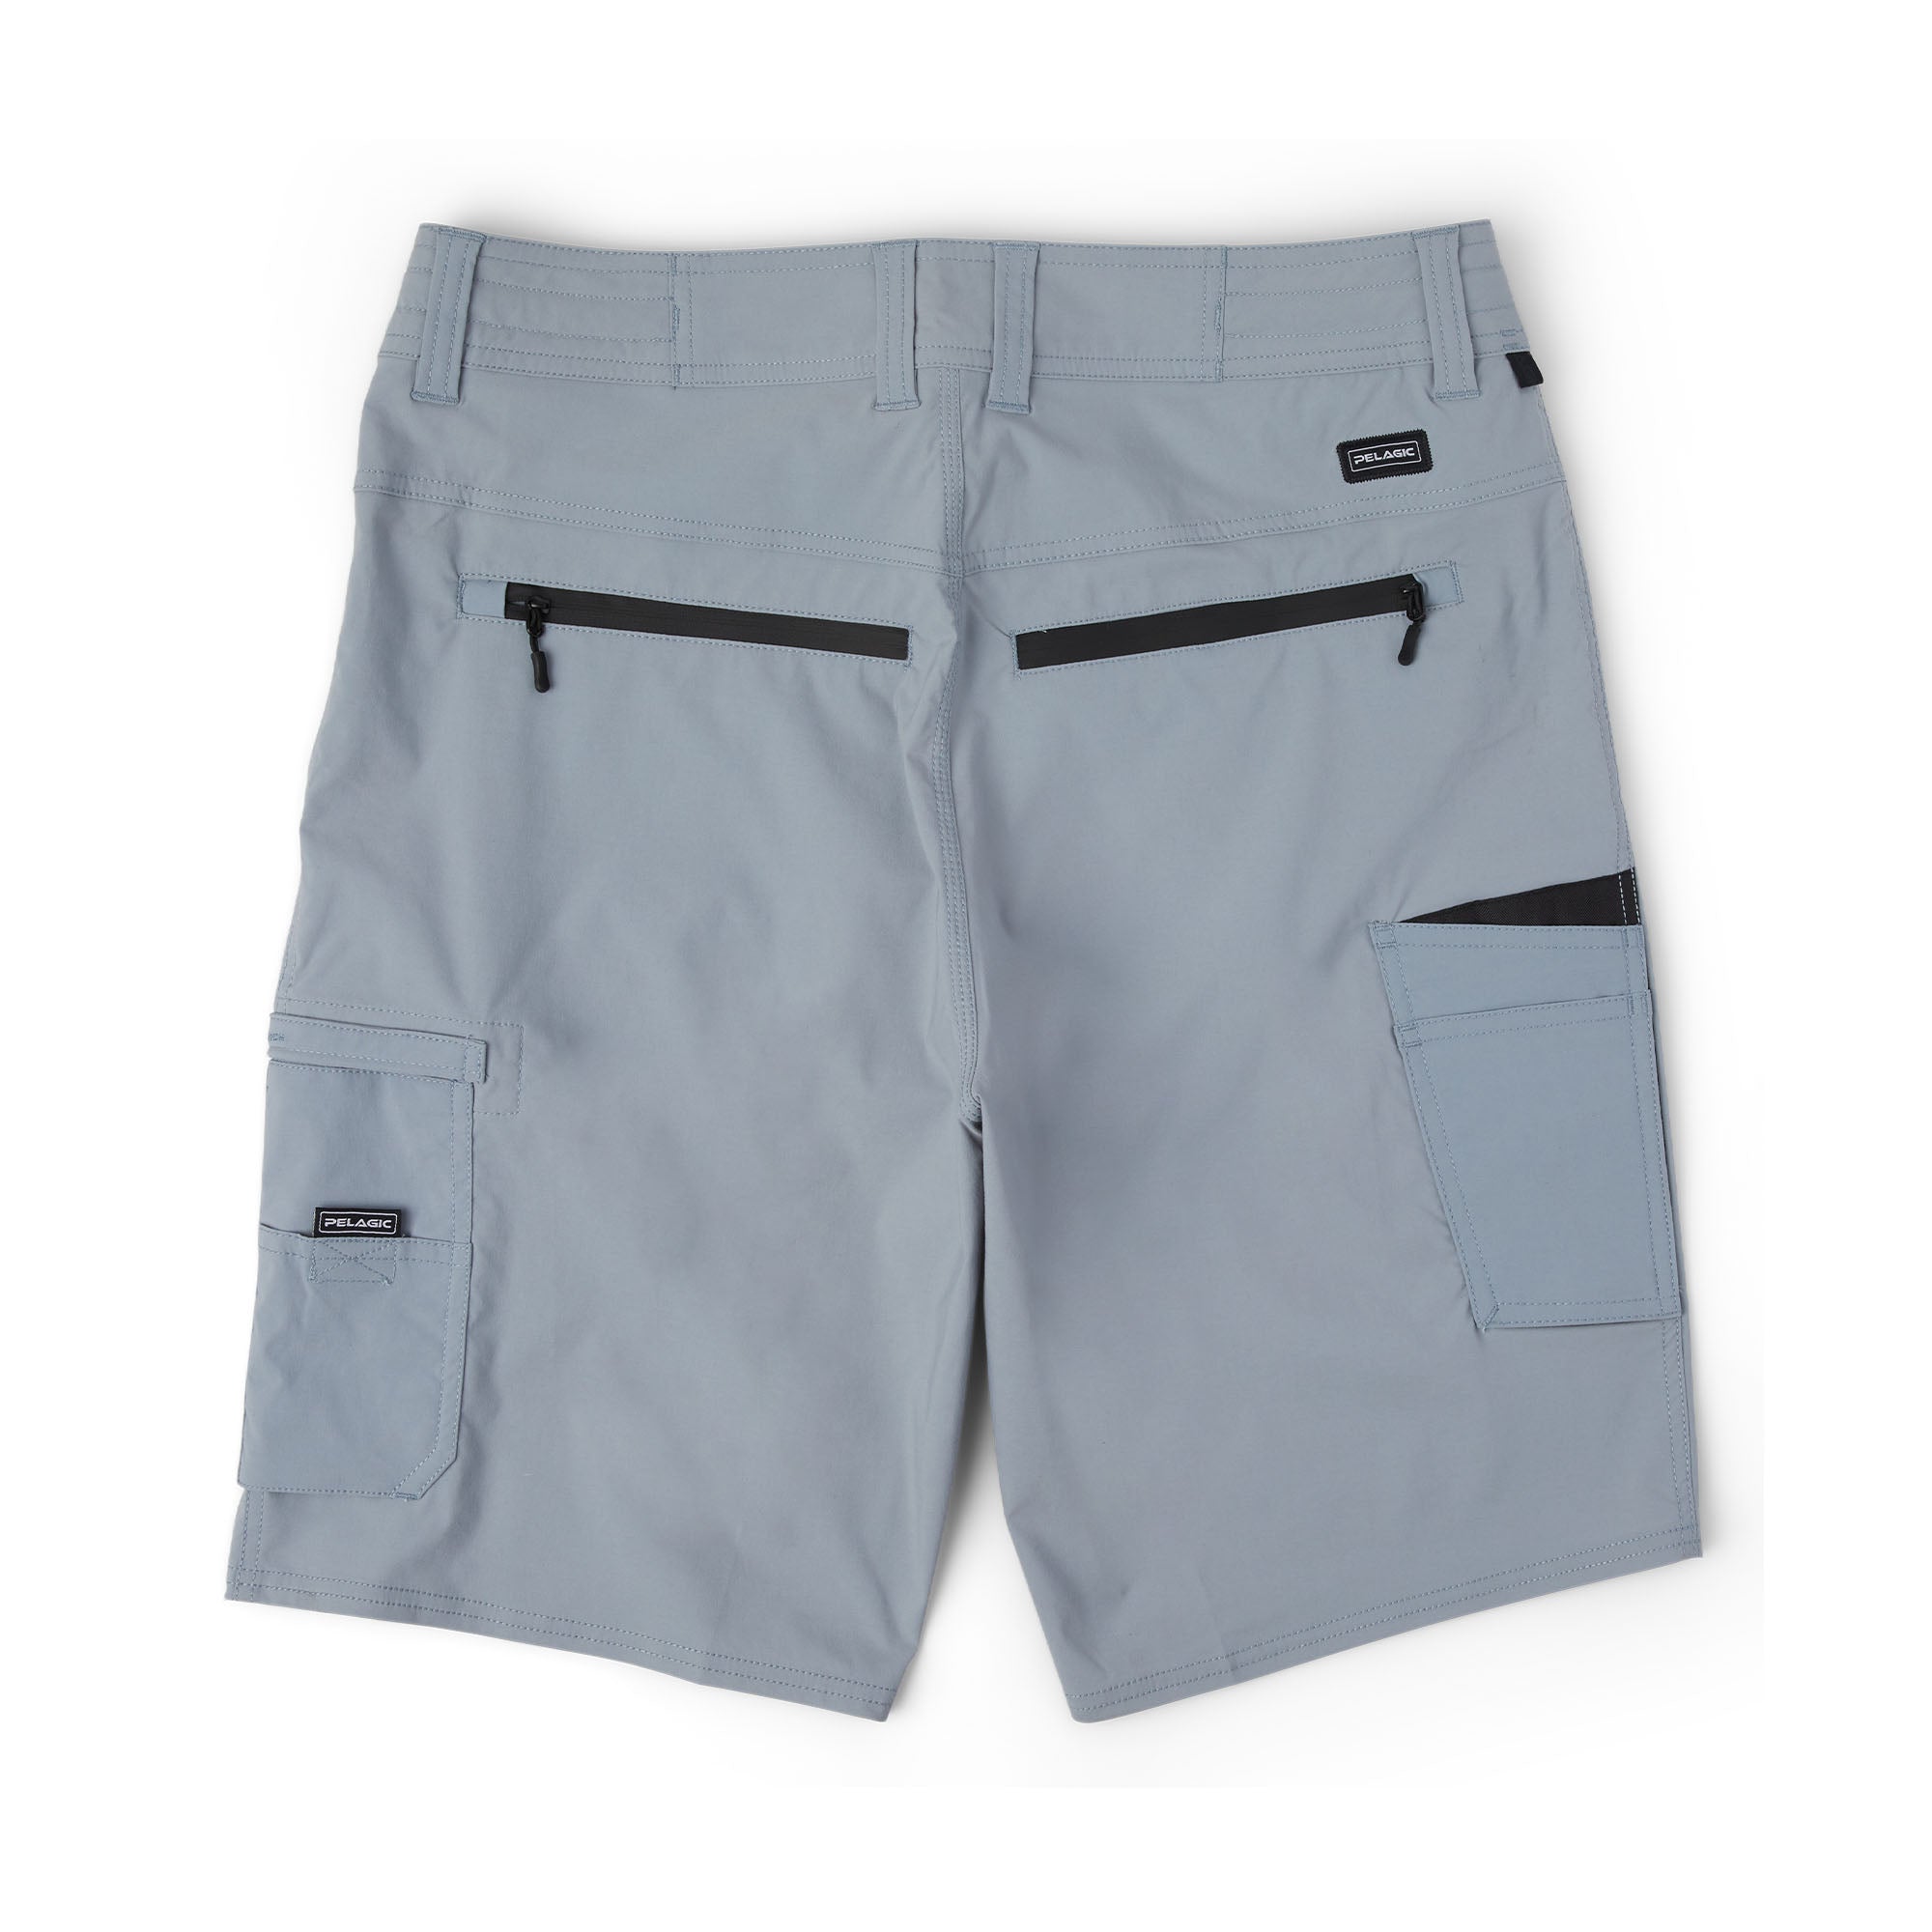 Pelagic Traverse Hybrid Shorts 20 34 / Slate